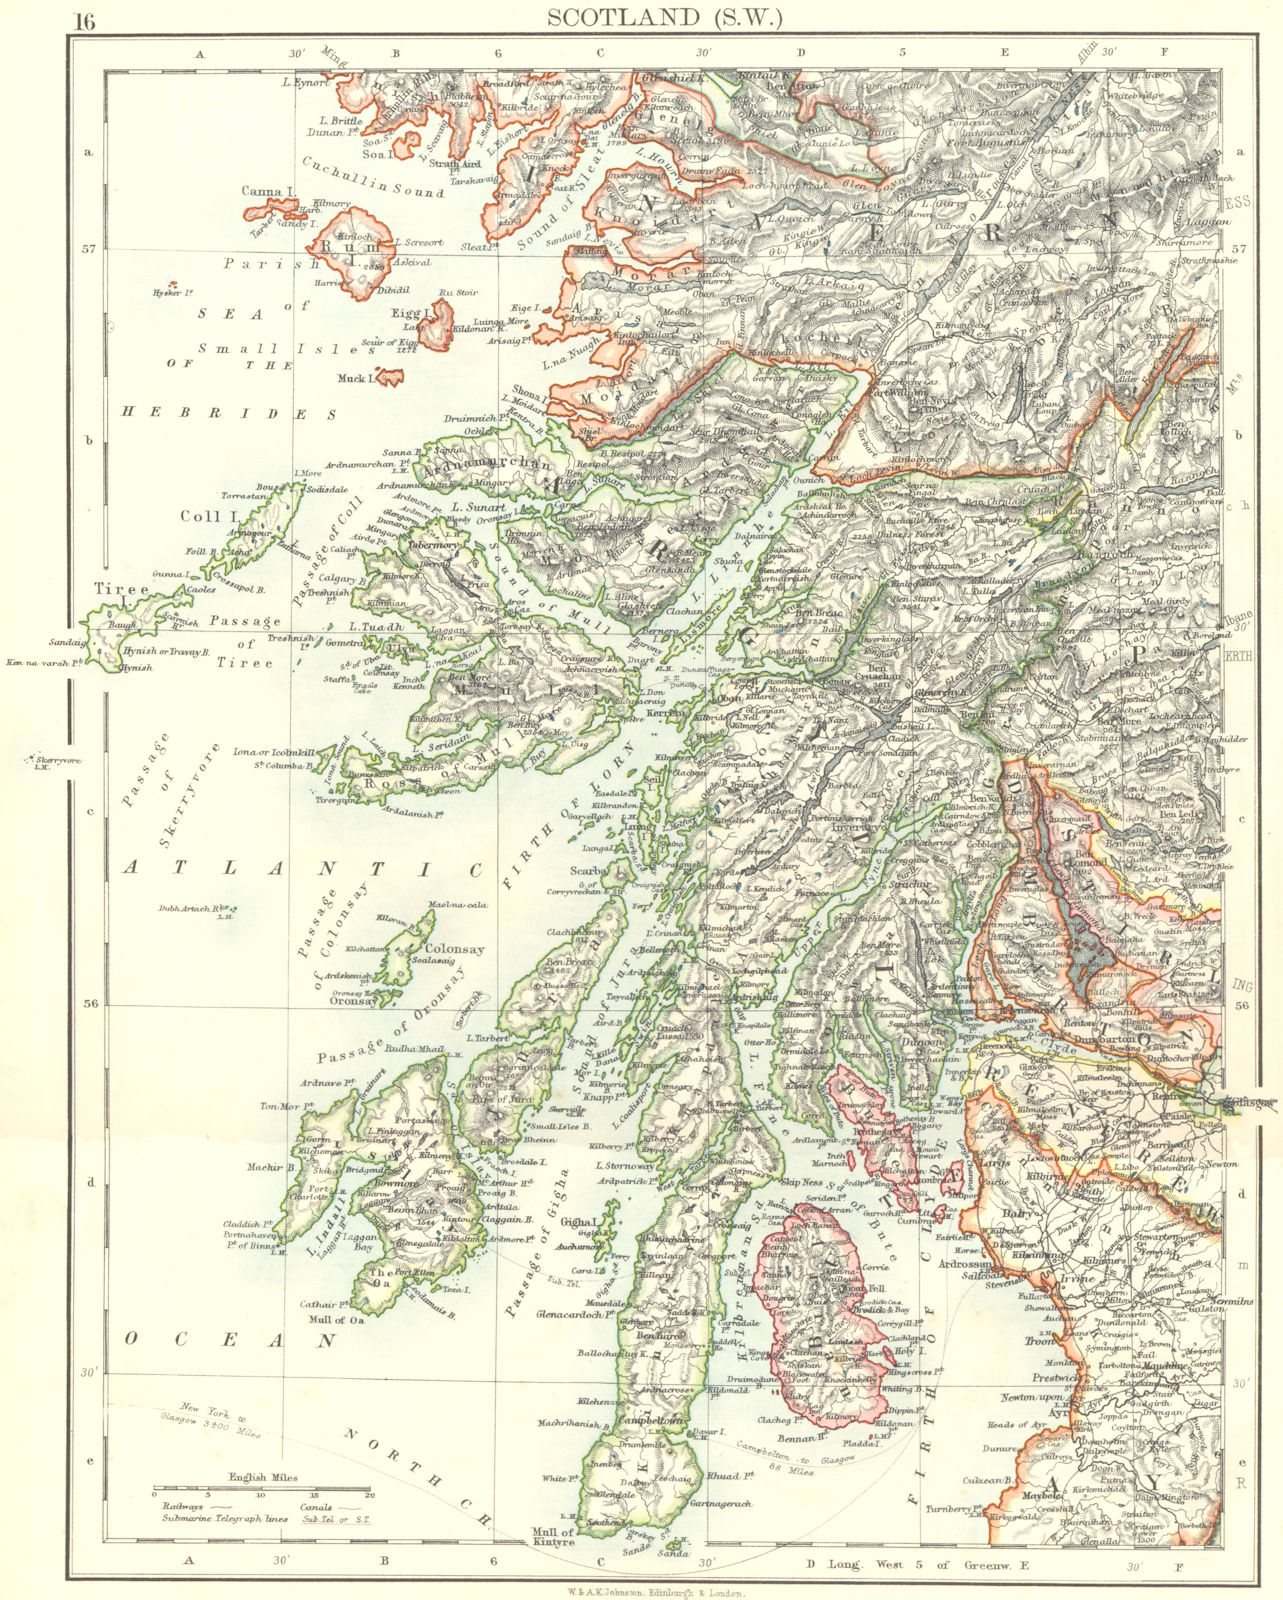 ARGYLLSHIRE. South West Scotland. Bute Arran Dumbarton. JOHNSTON 1899 old map